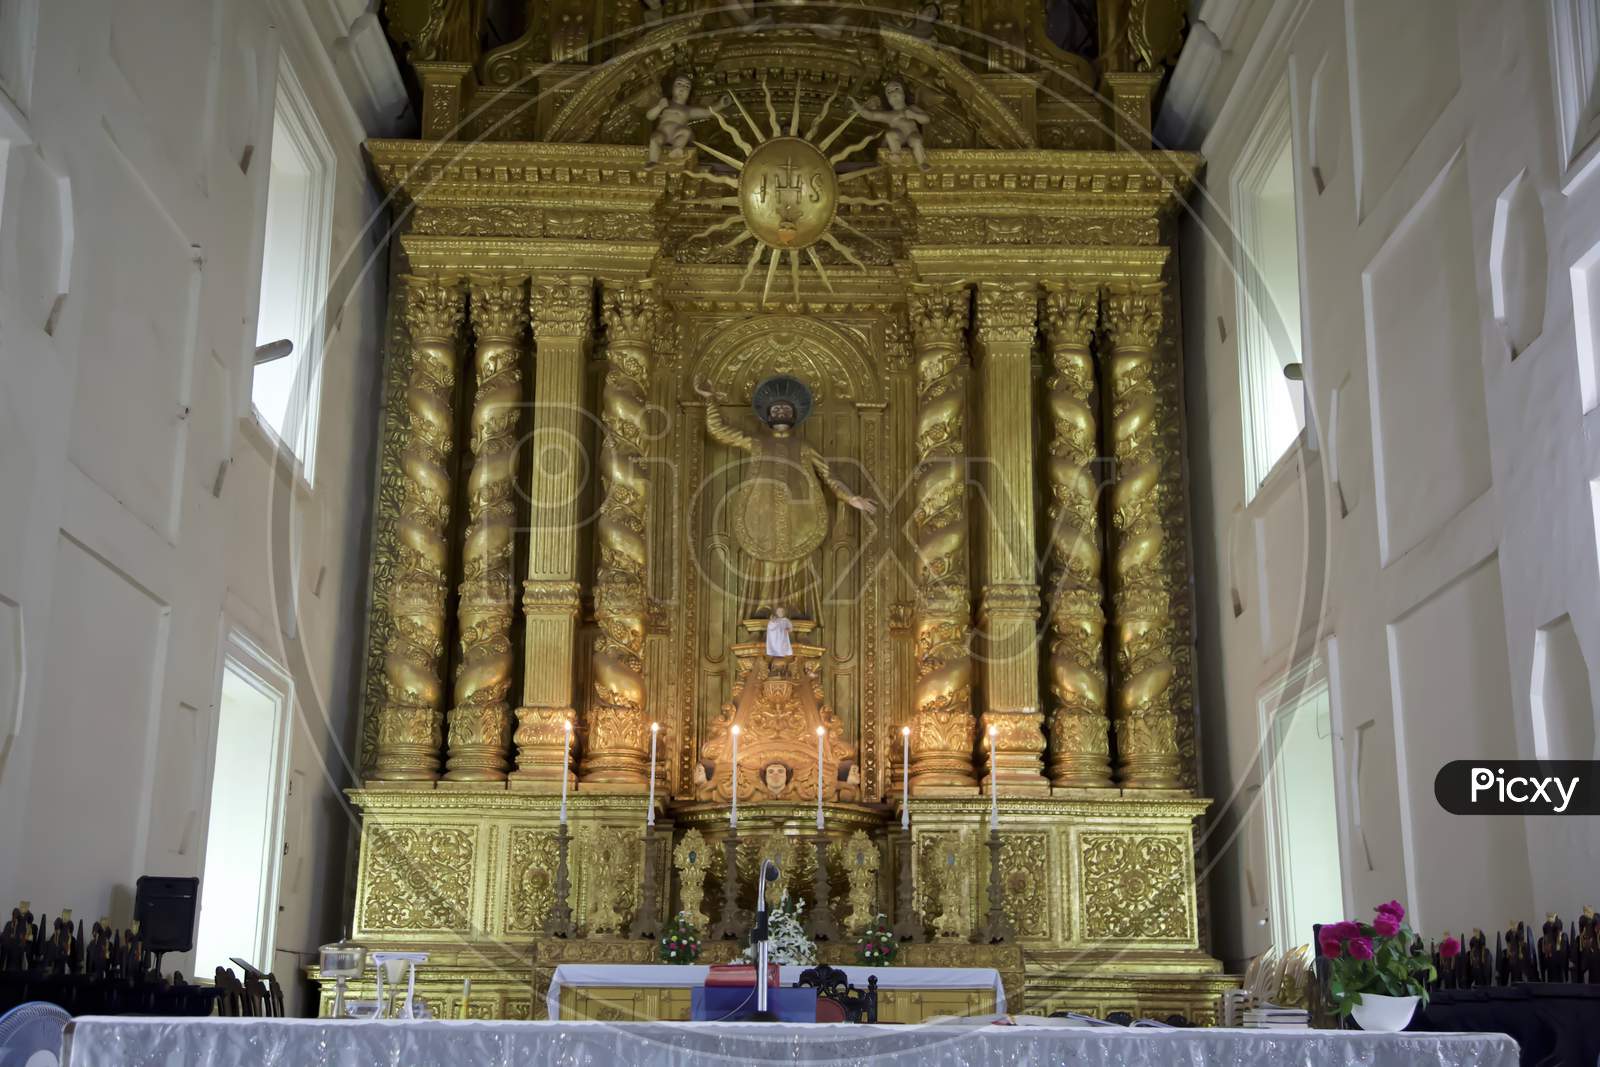 The Altar Of The Basilica Of Bom Jesus. The Golden Altar Of The Basilica Of Bom Jesus, Goa. India